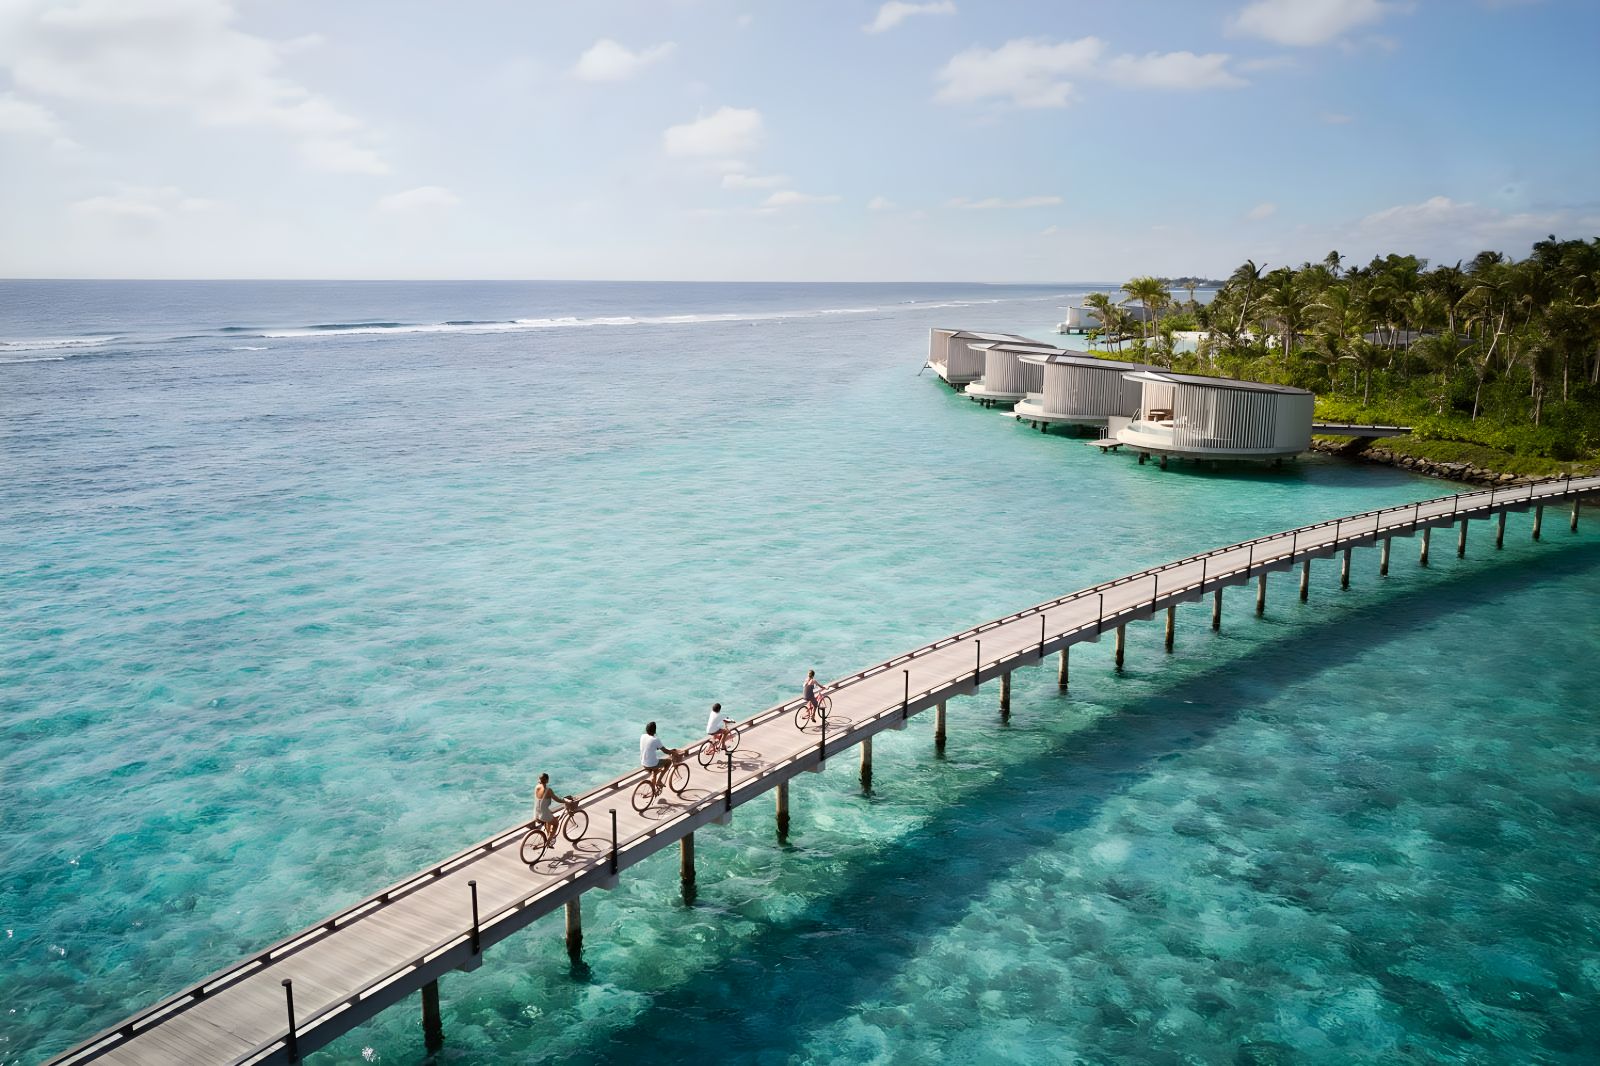 Cycling bridge on the resort of Ritz Carlton Maldives